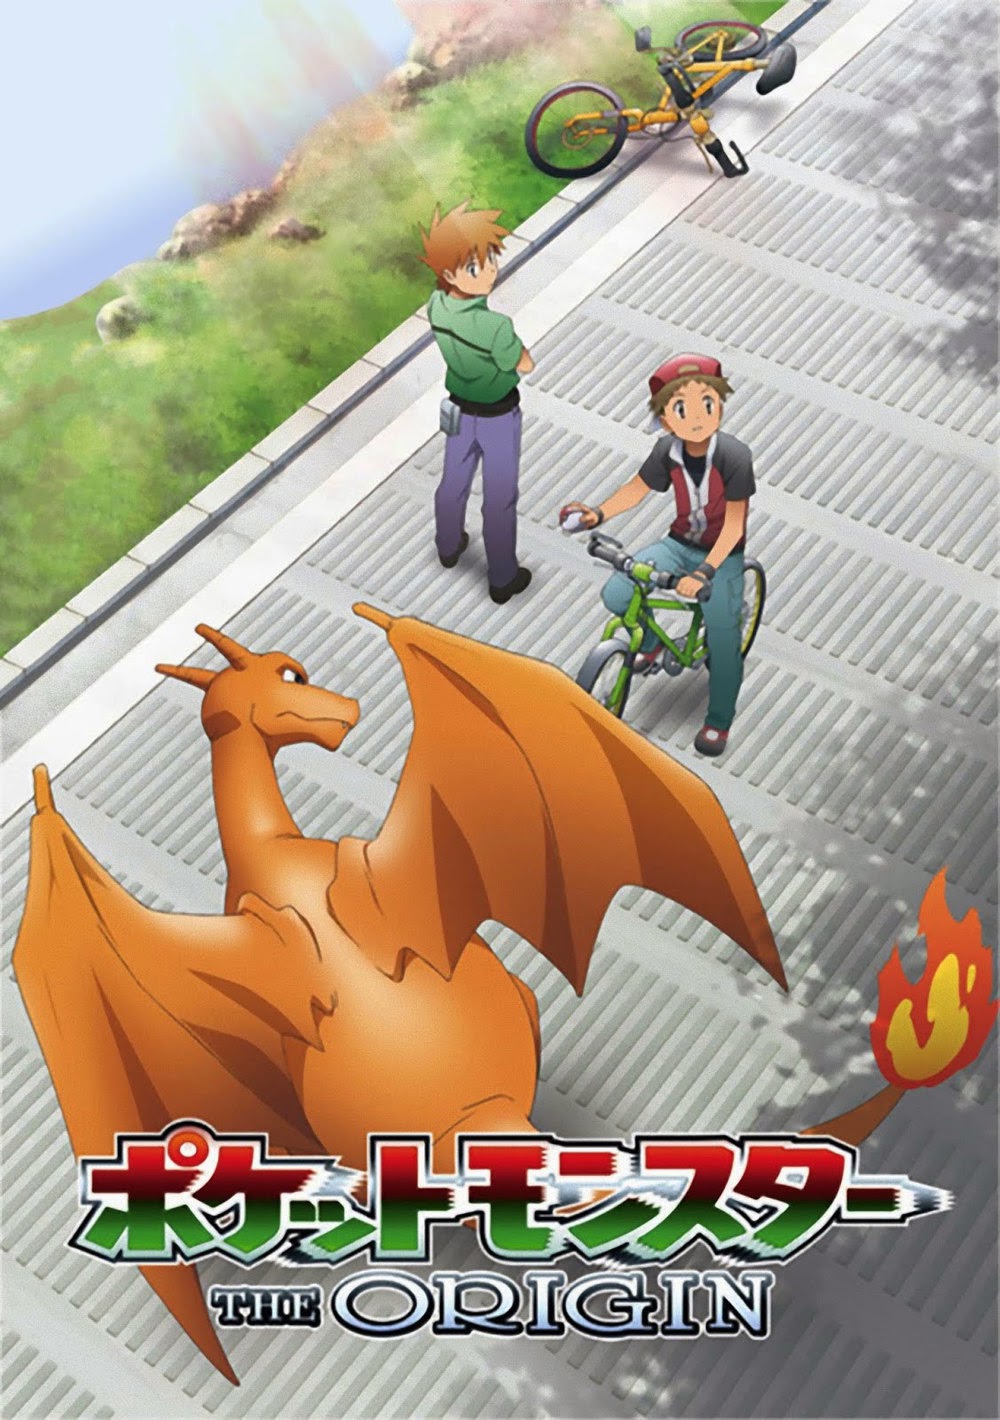 Dvd Anime Pokémon 14ª Temporada Preto E Branco Dublado